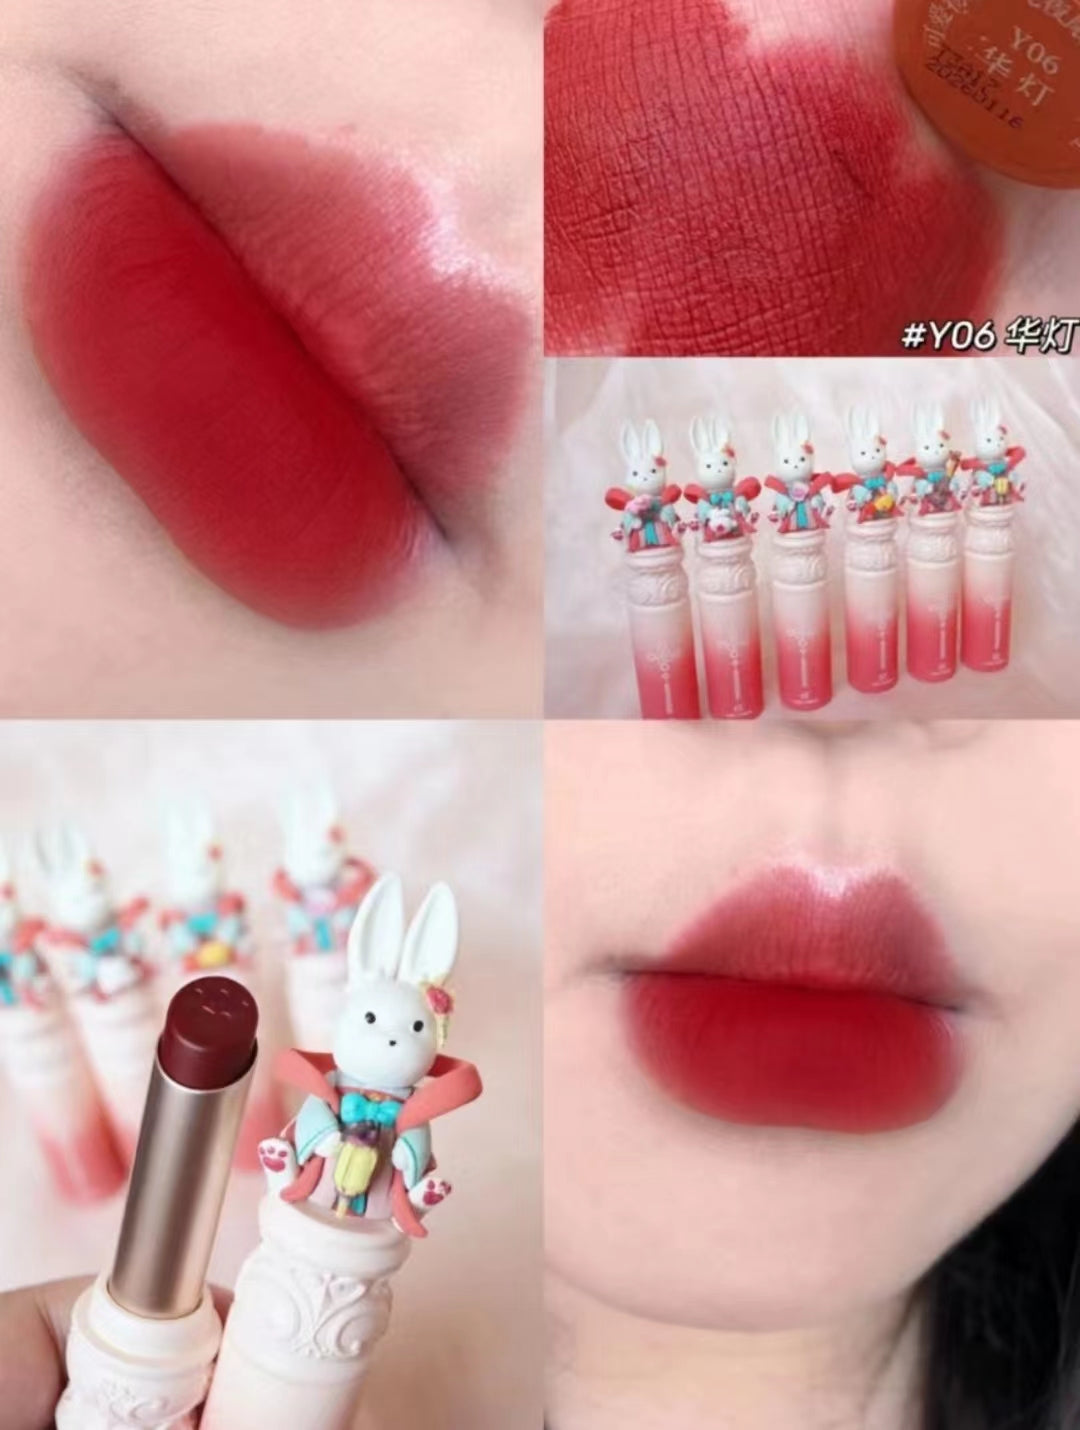 CuteRumor Bunny Lip Gloss/ Matte Lip Mud / Lipstick 可爱物语兔兔唇釉镜面唇釉/唇泥/口红 2.5g